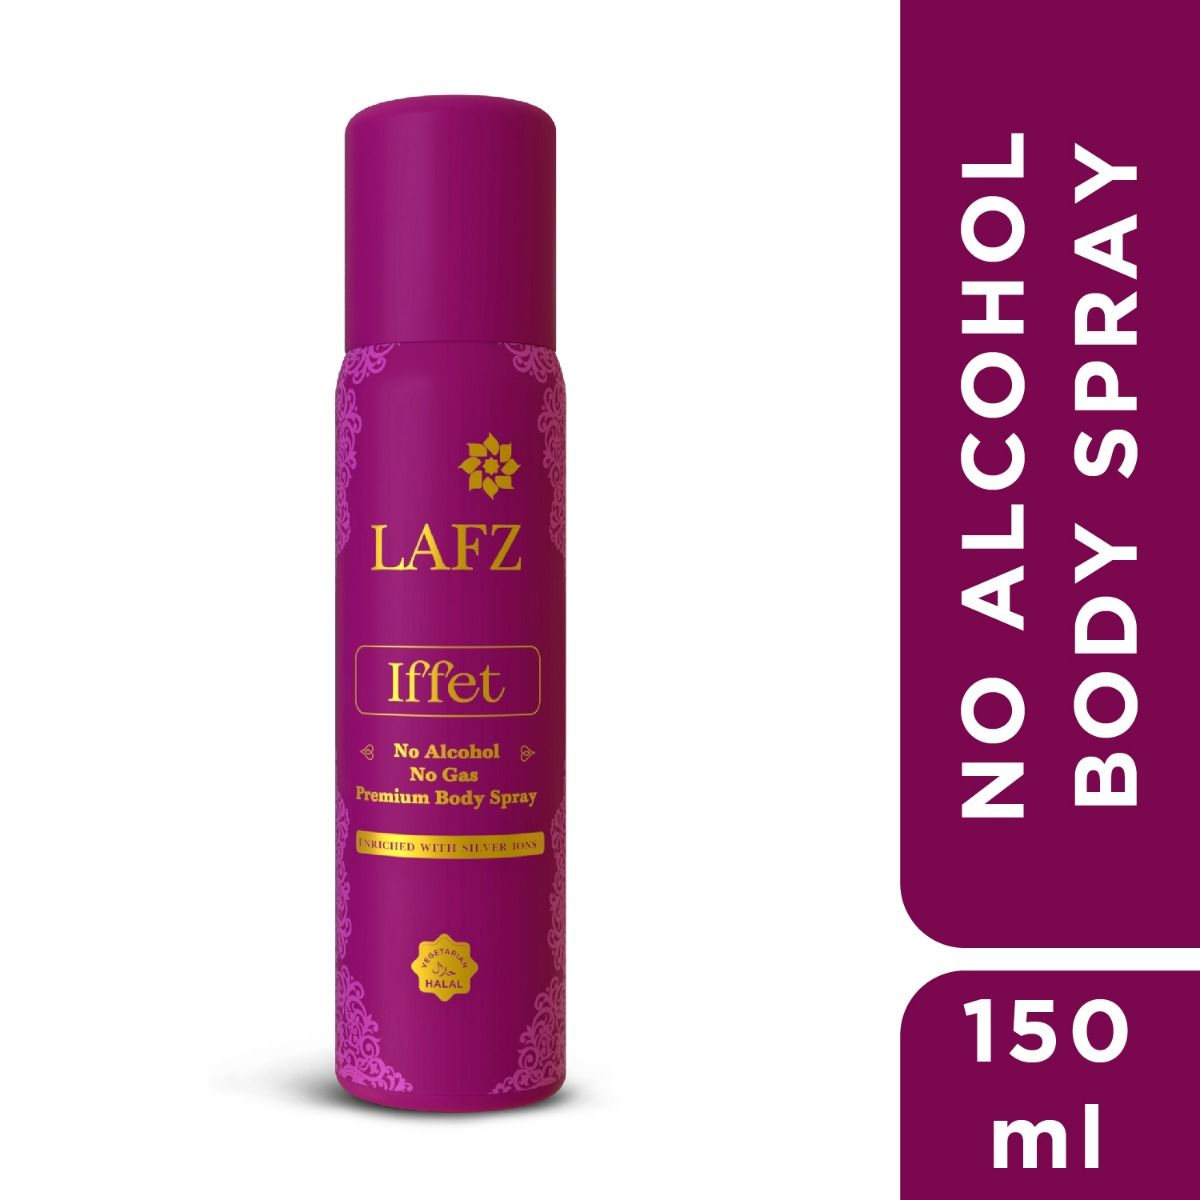 Lafz Iffet Women's Premium Body Spray